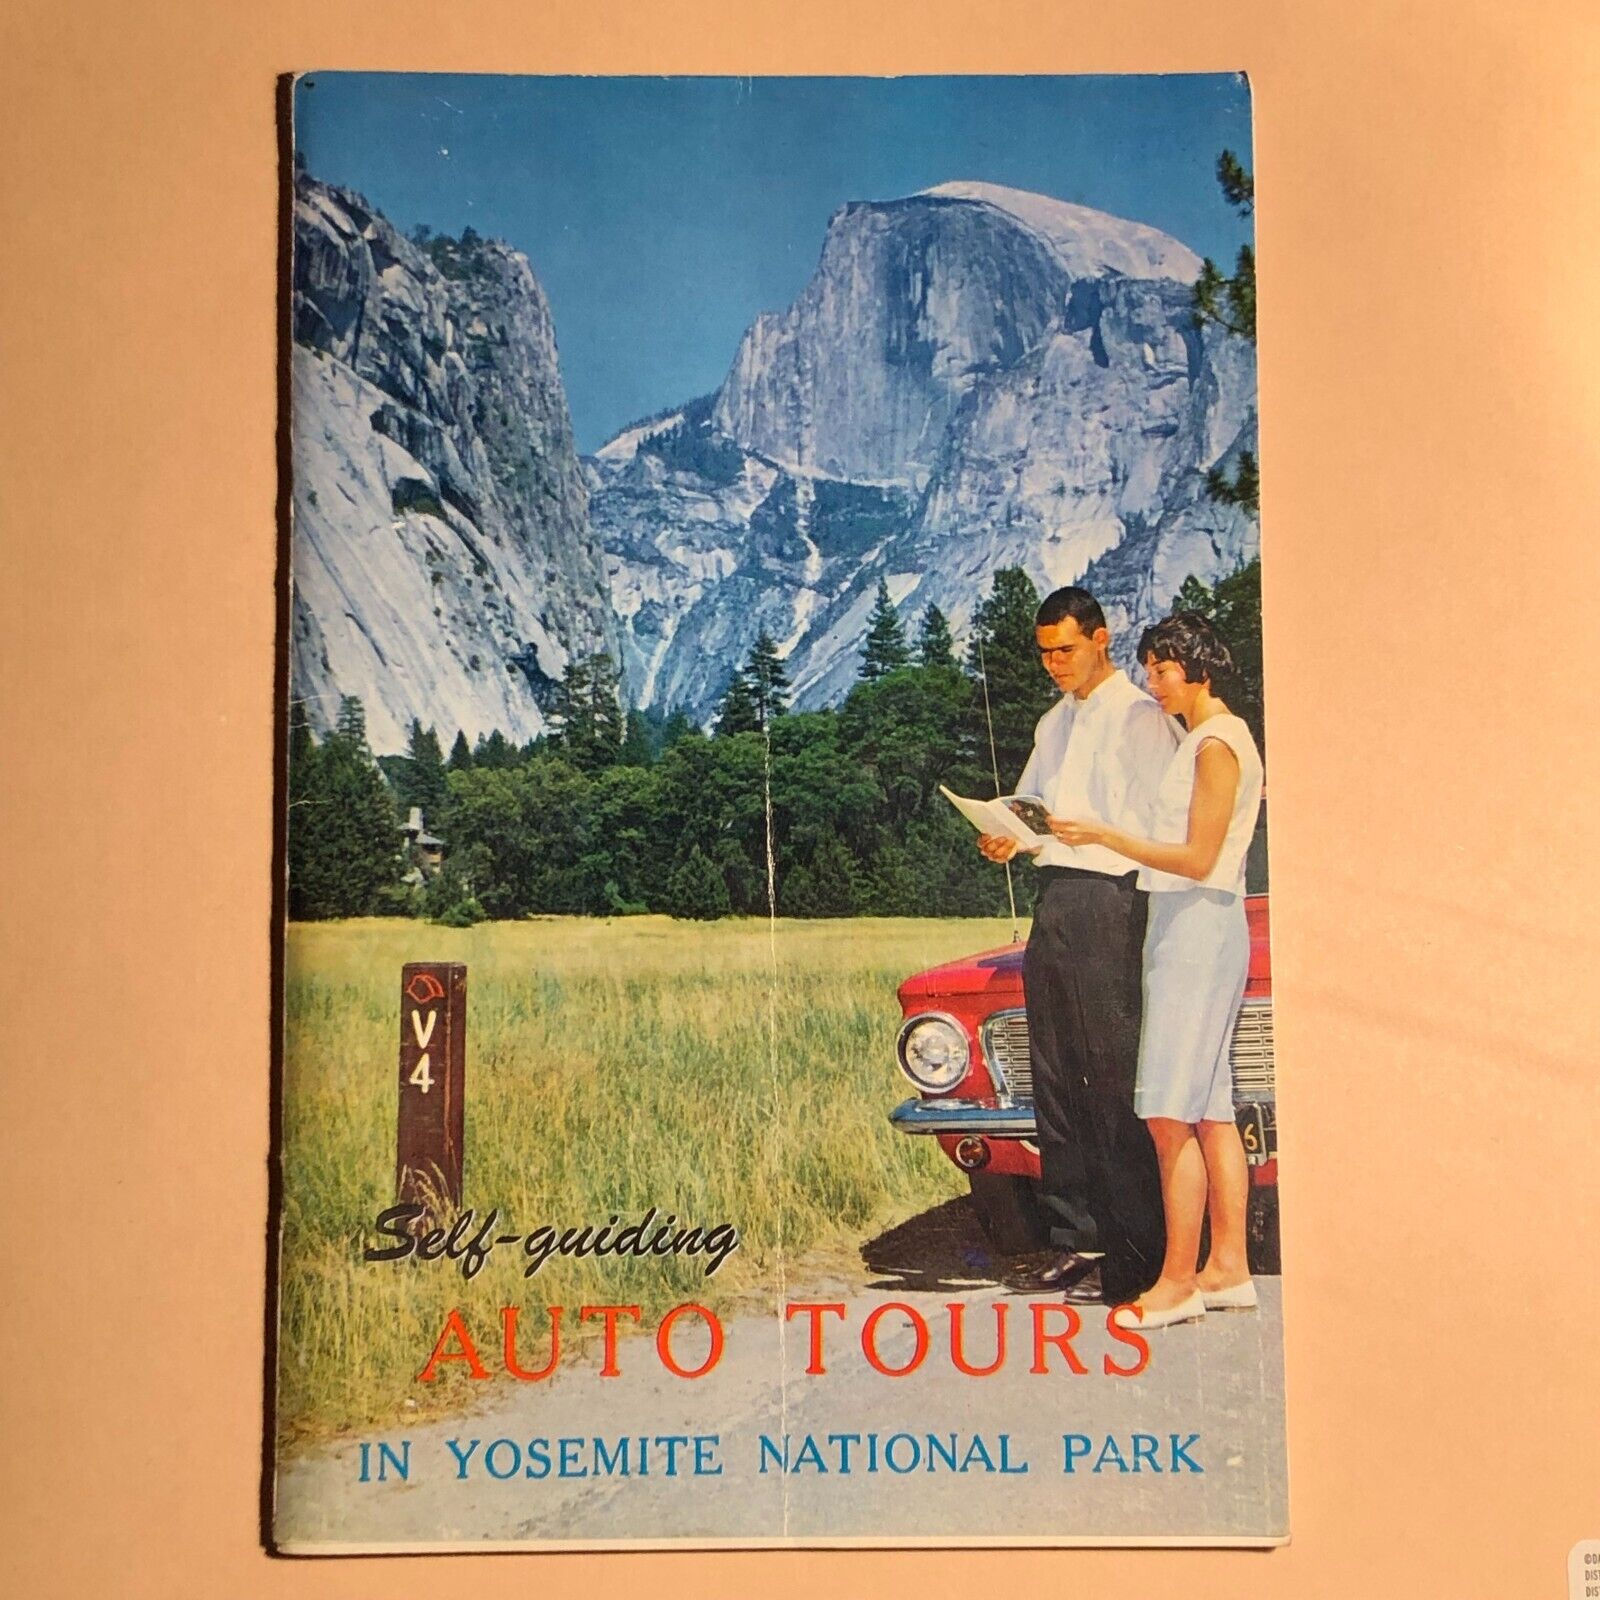 1965 YOSEMITE NATIONAL PARK SELF-GUIDING AUTO TOURS TRAVEL GUIDE VINTAGE